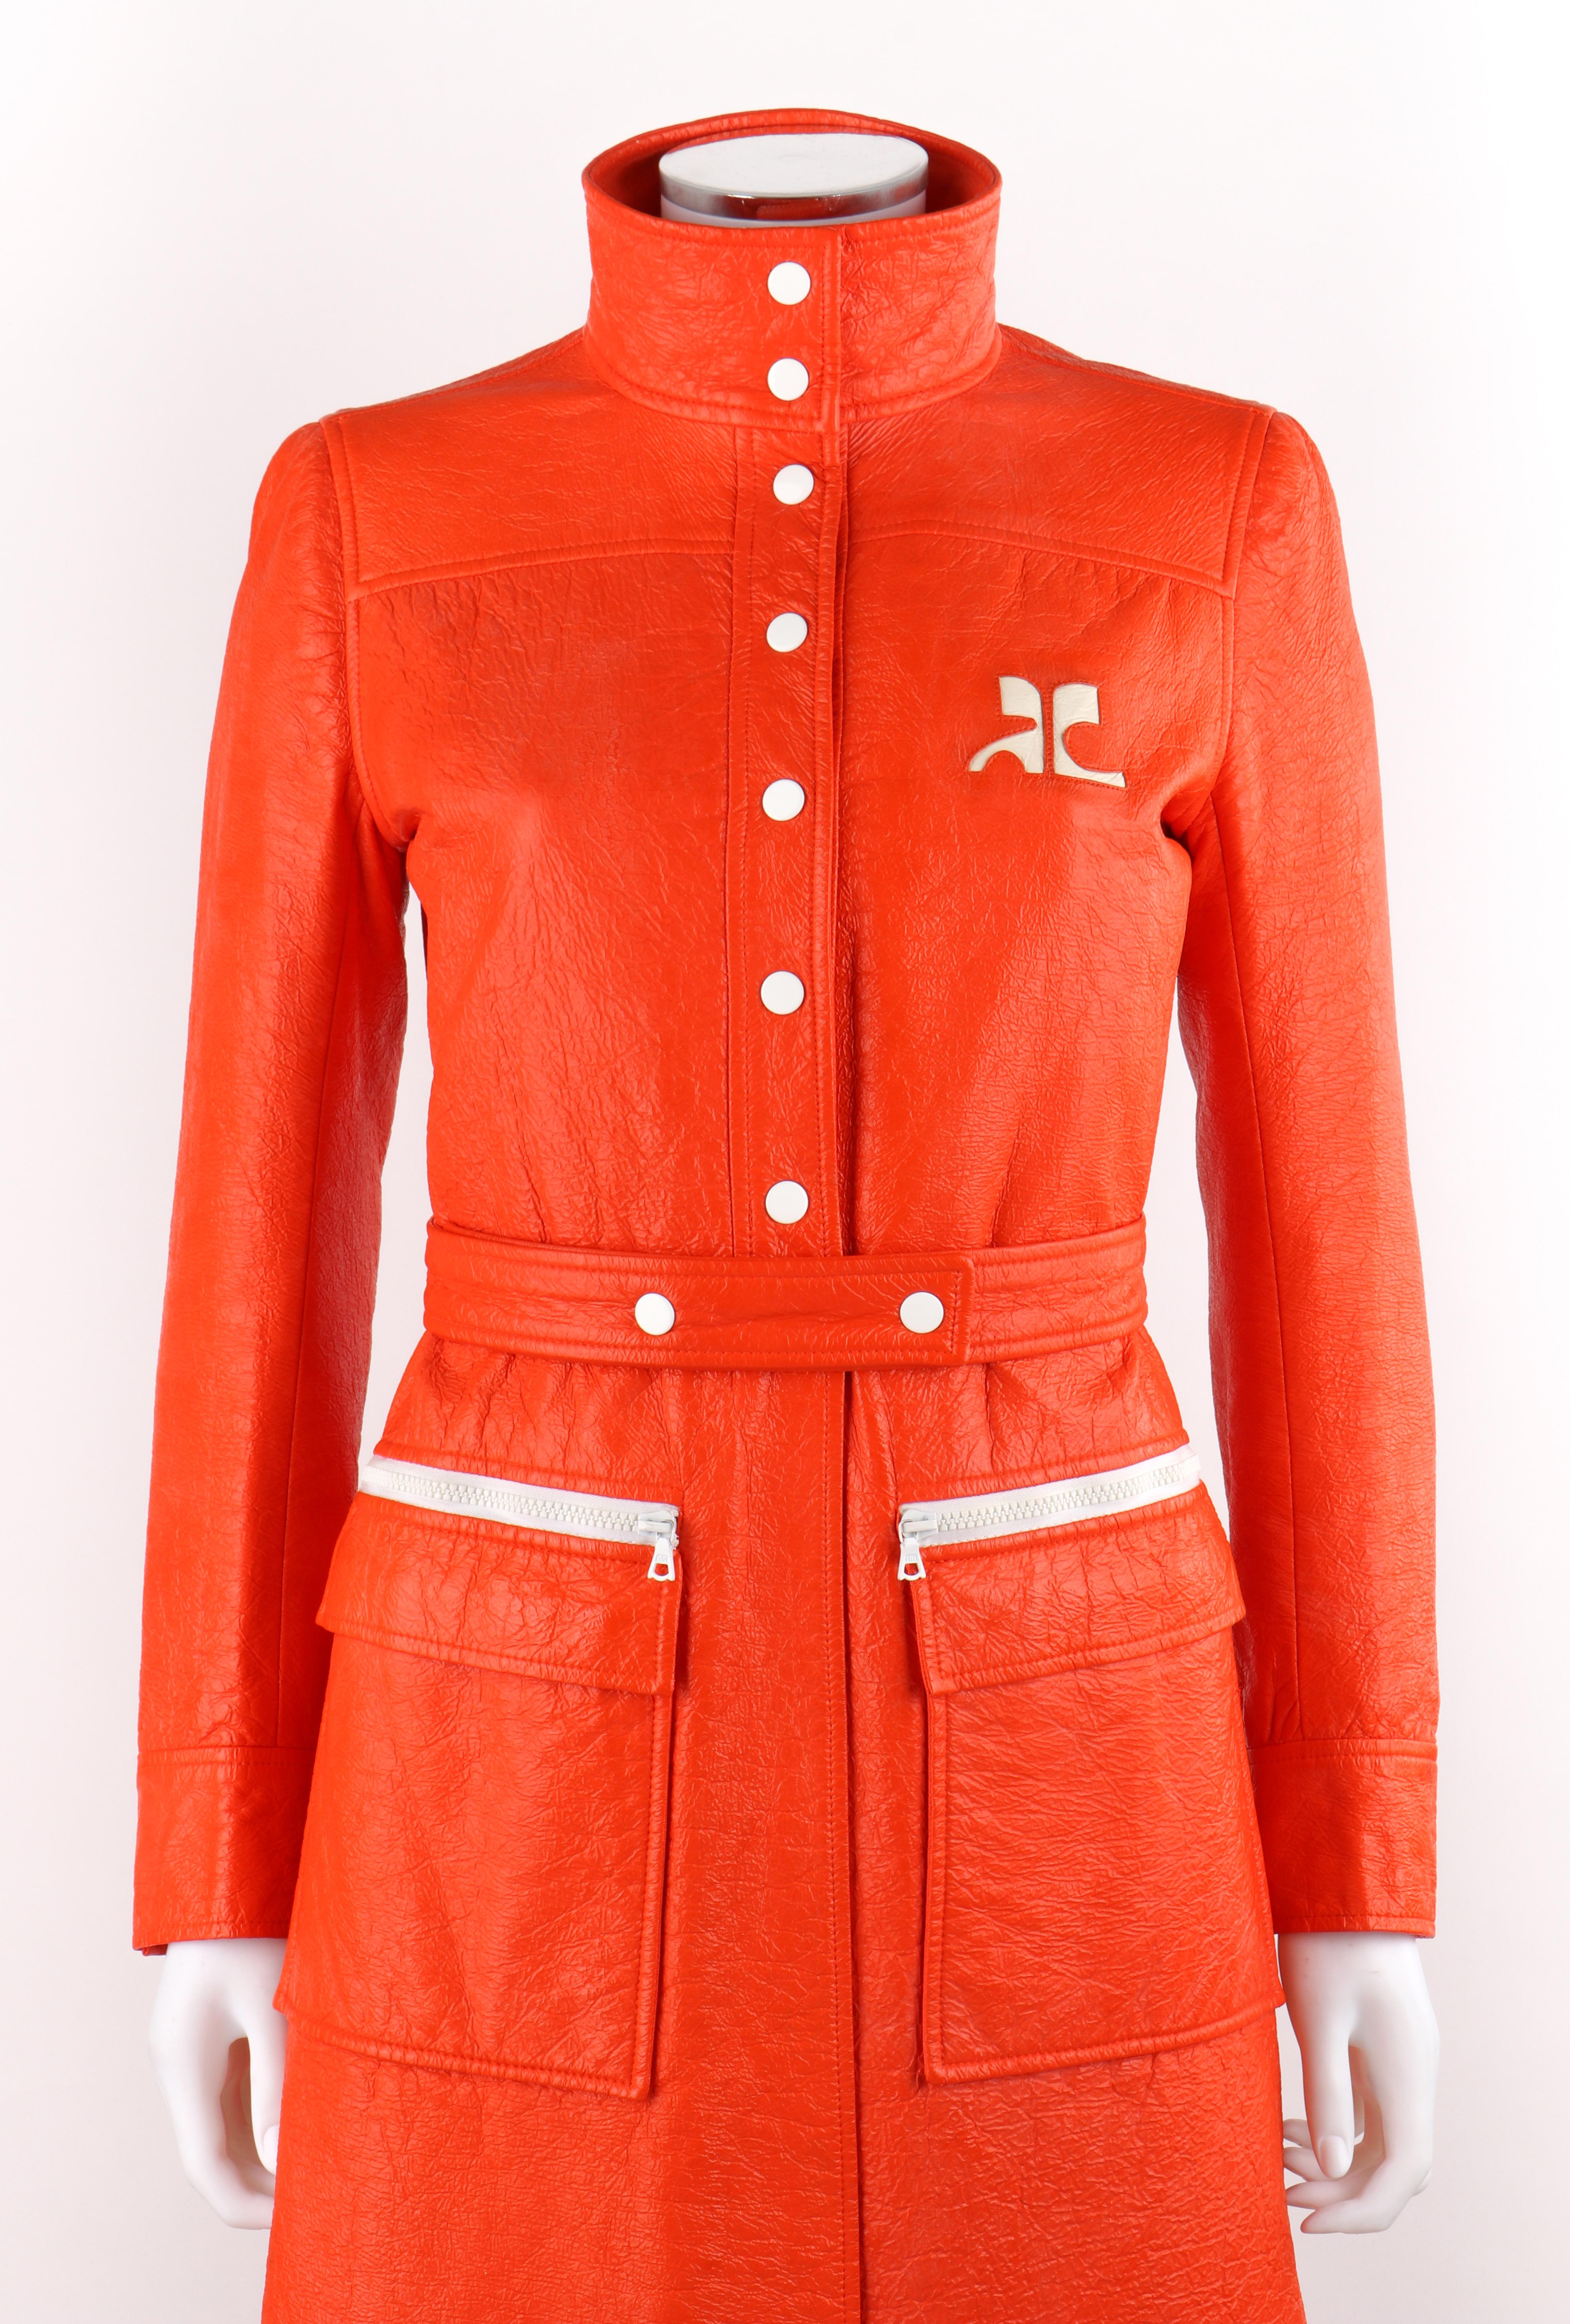 Red COURREGES c.1972 Orange Textured Vinyl Mod Signature Logo Trench Coat Jacket 